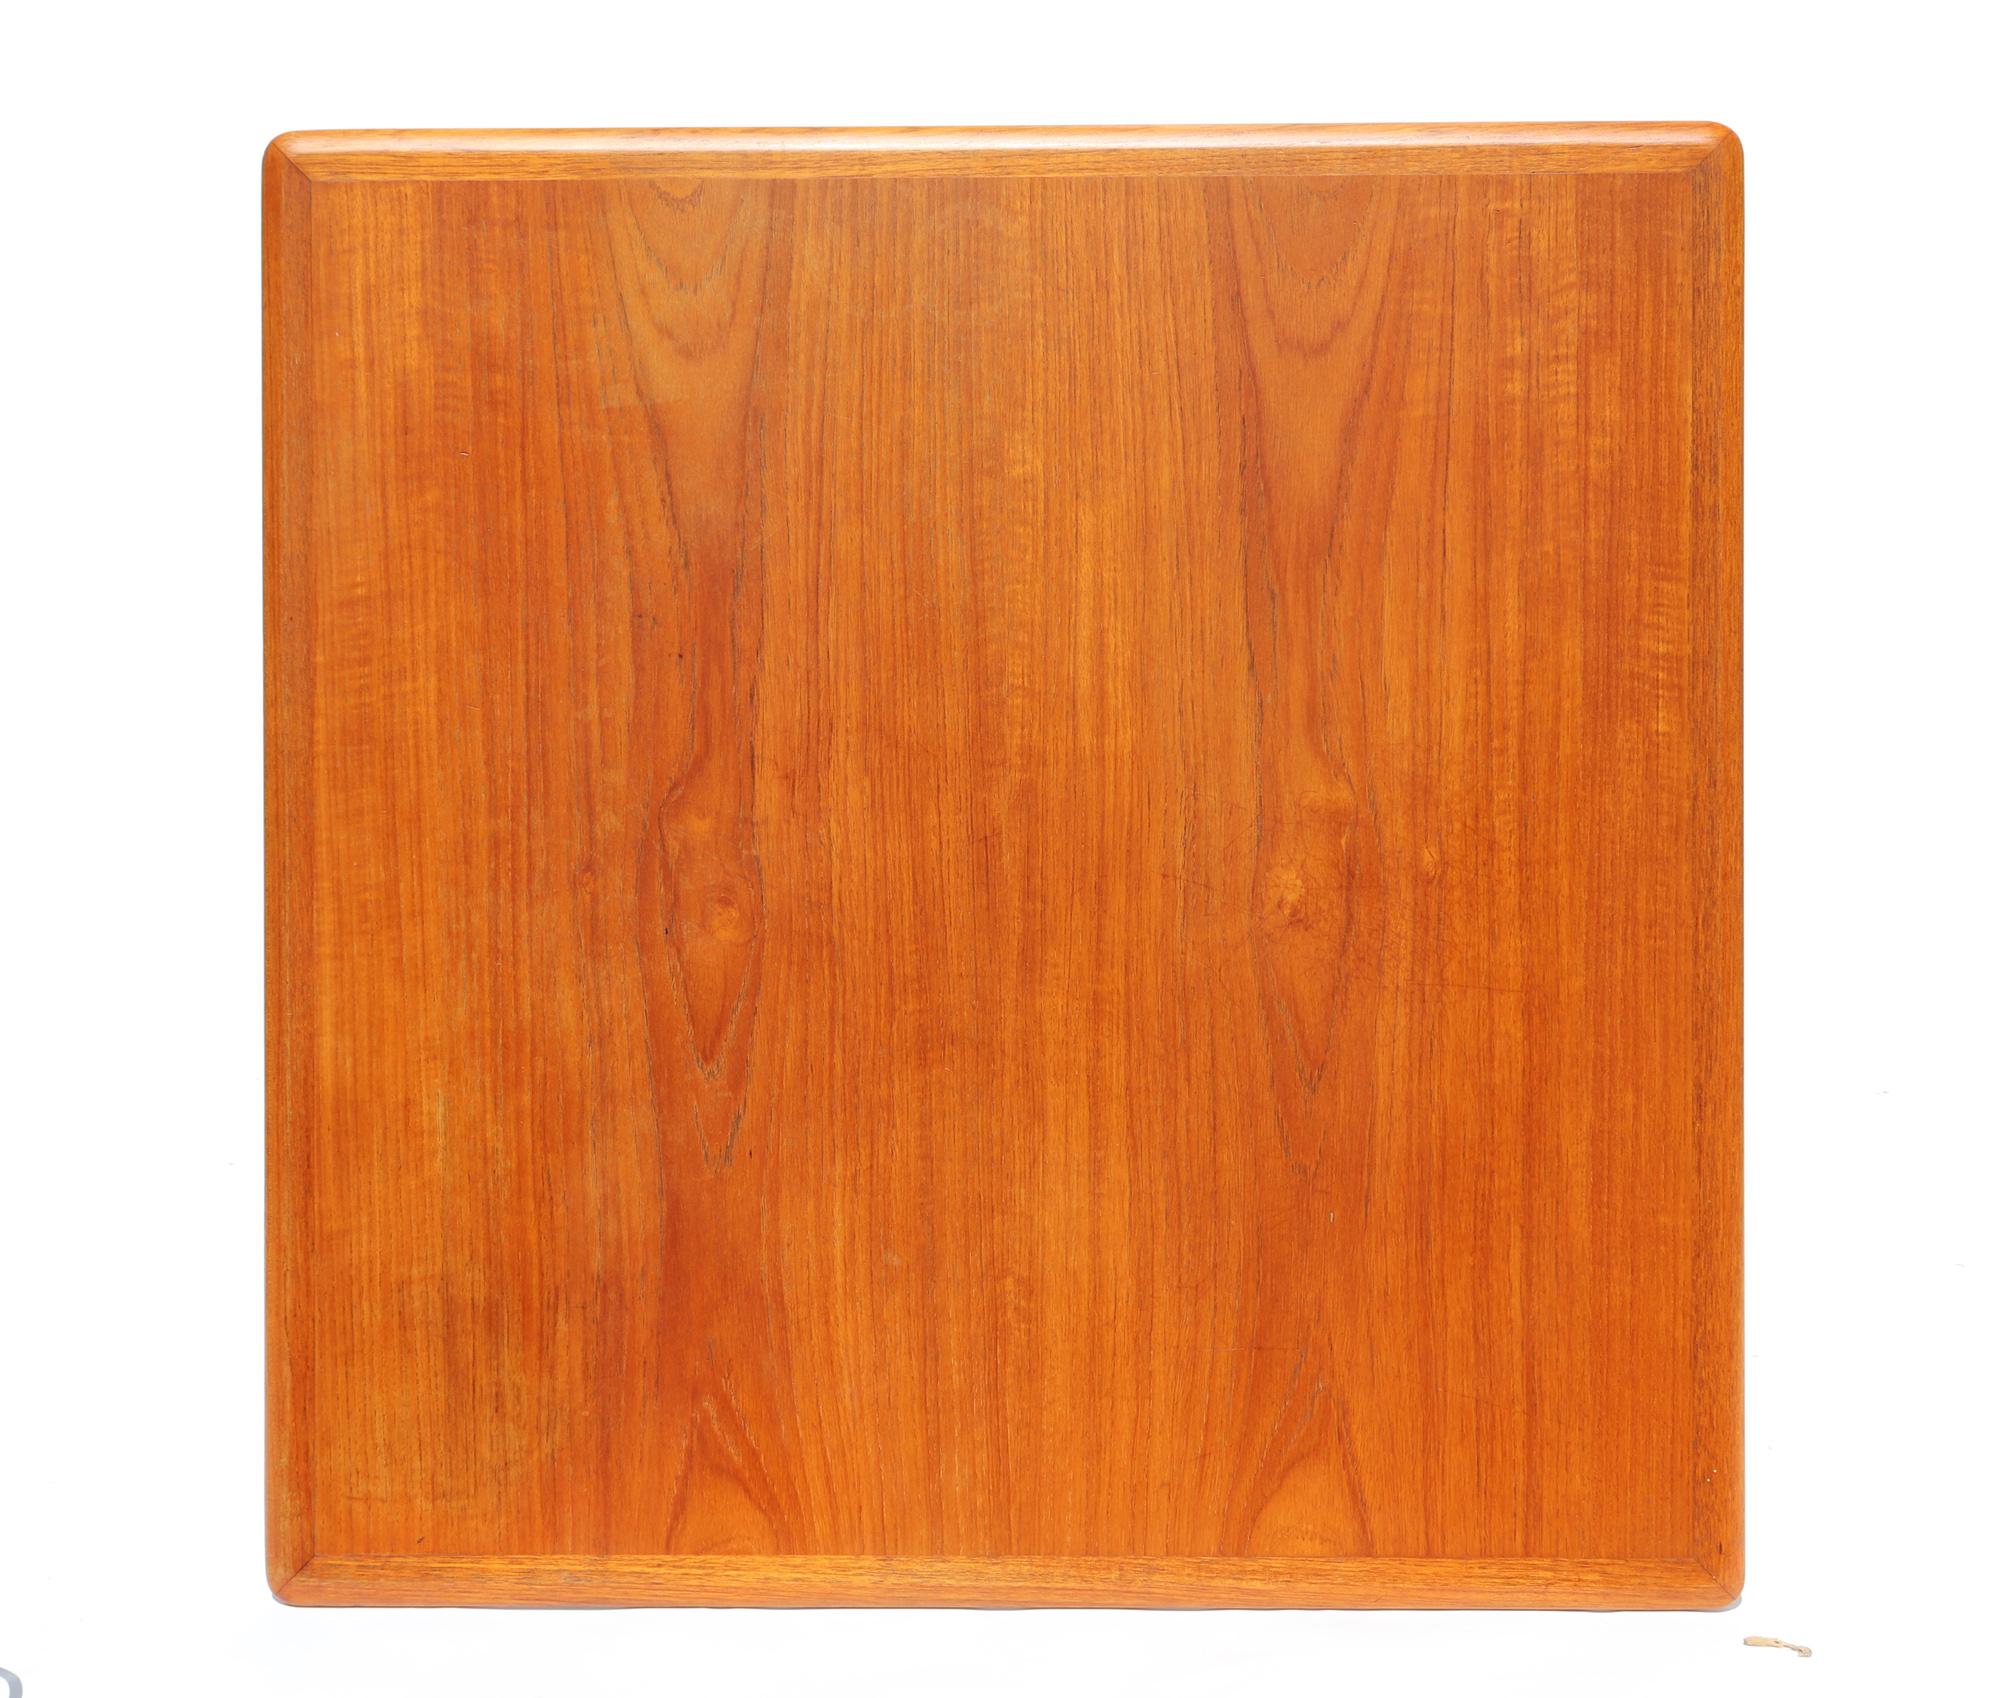 Wood Mid-Century Modern Trioh Danish Modern Occasional Teak Table For Sale